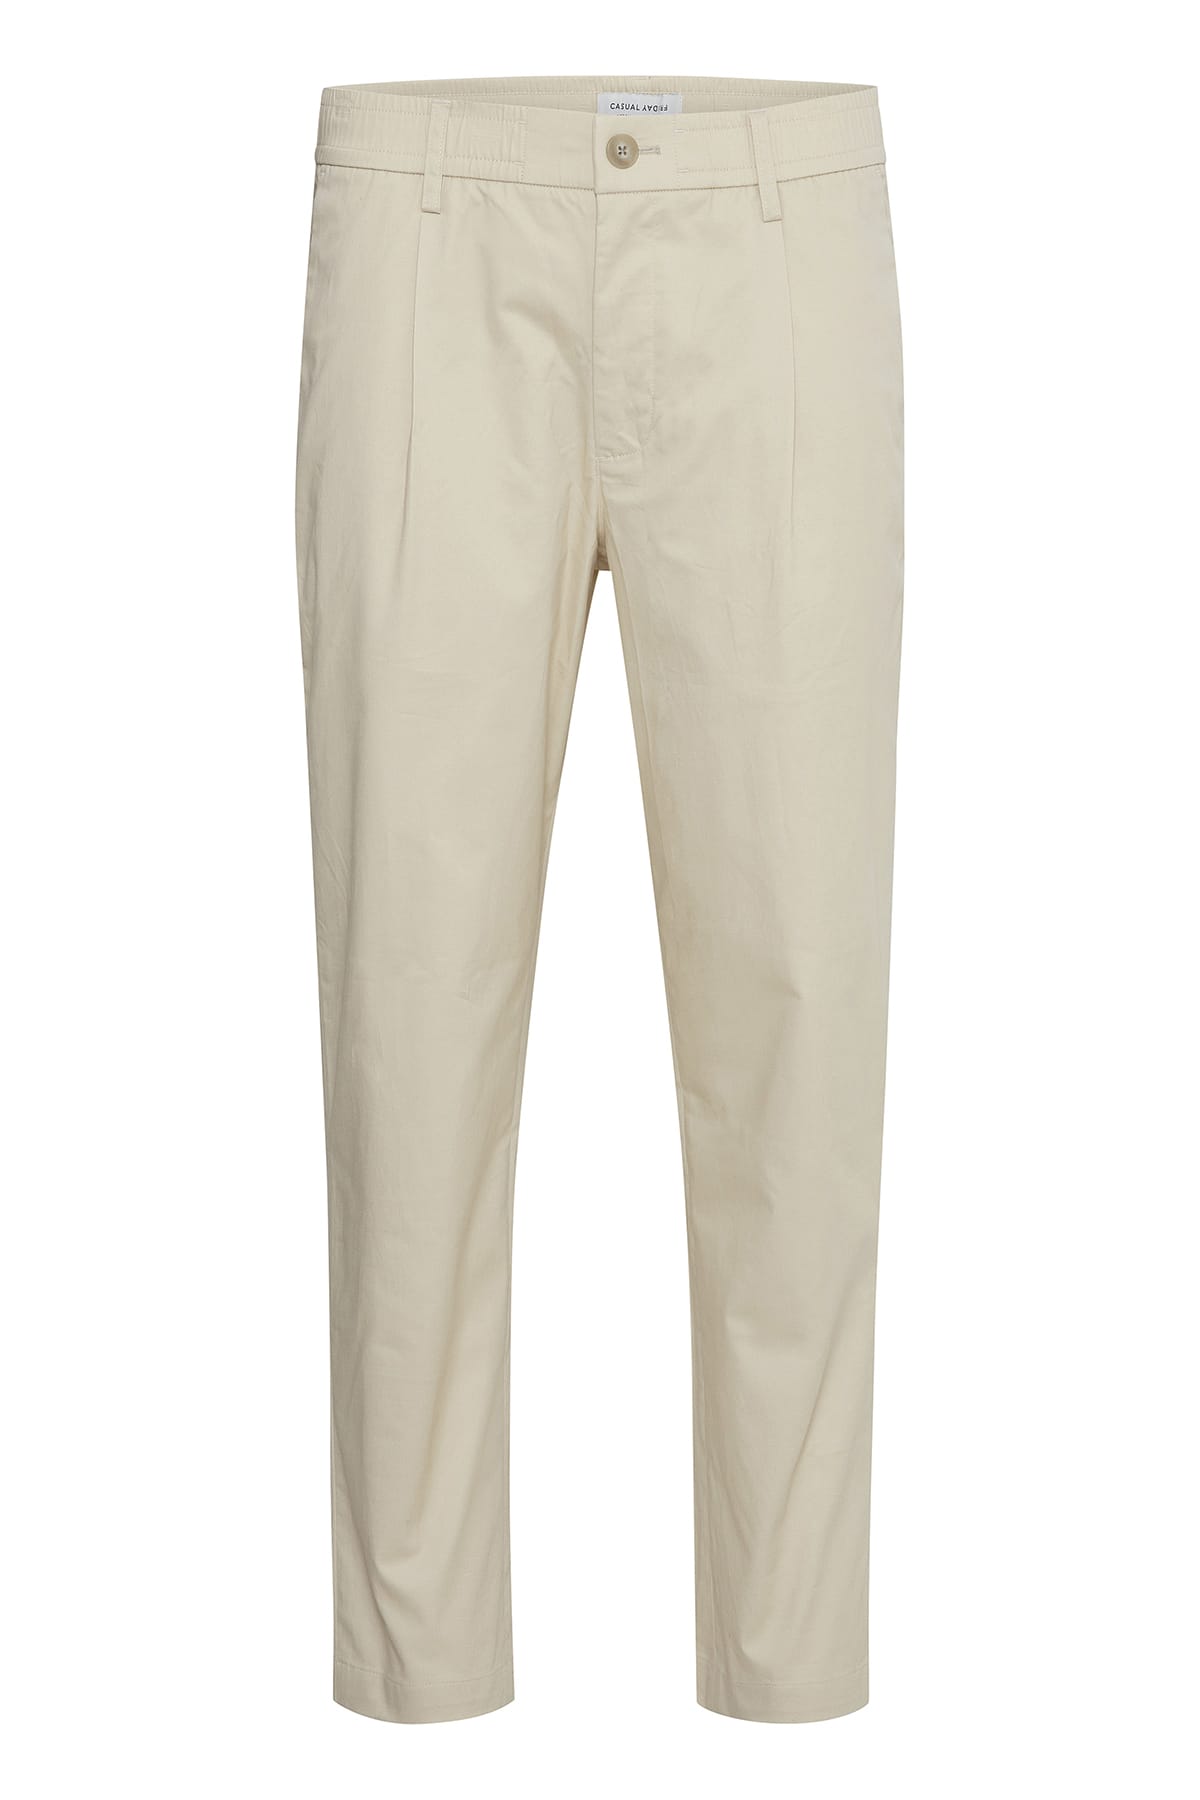 Hose CFMarc 0143 pleated pants White Asparagus Hose Casual Friday 